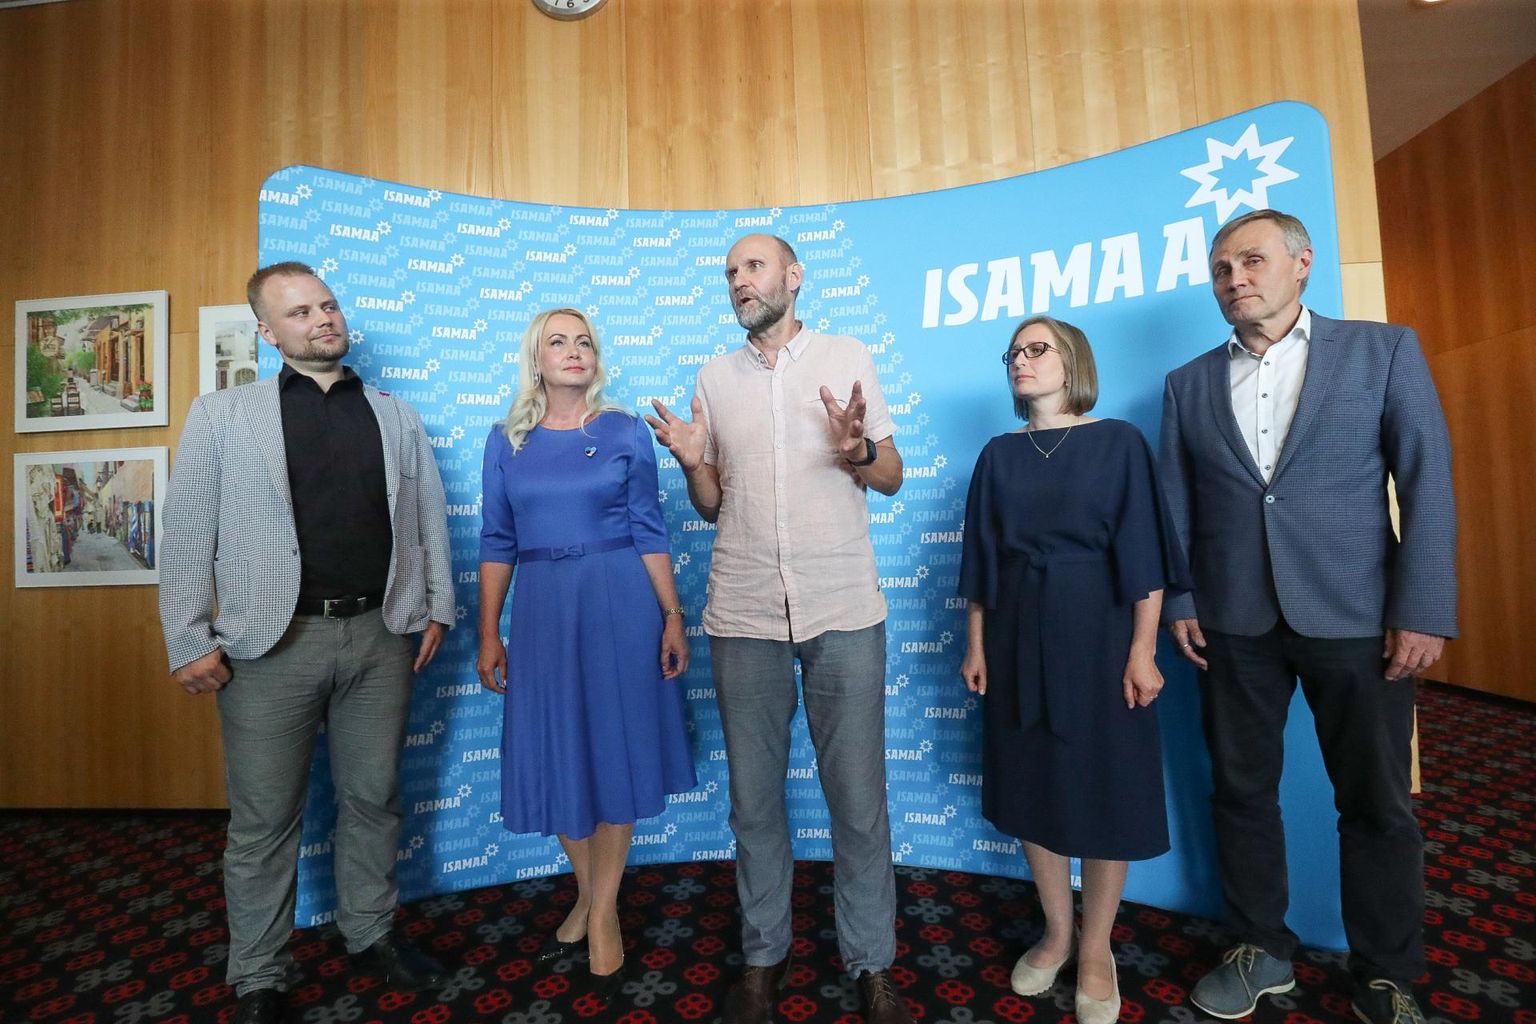 Ministerial candidates of Isamaa. Helir-Valdor Seeder (center) presents: Kristjan Järvan, Riina Solman, Lea Danilson-Järg, Tõnis Lukas.